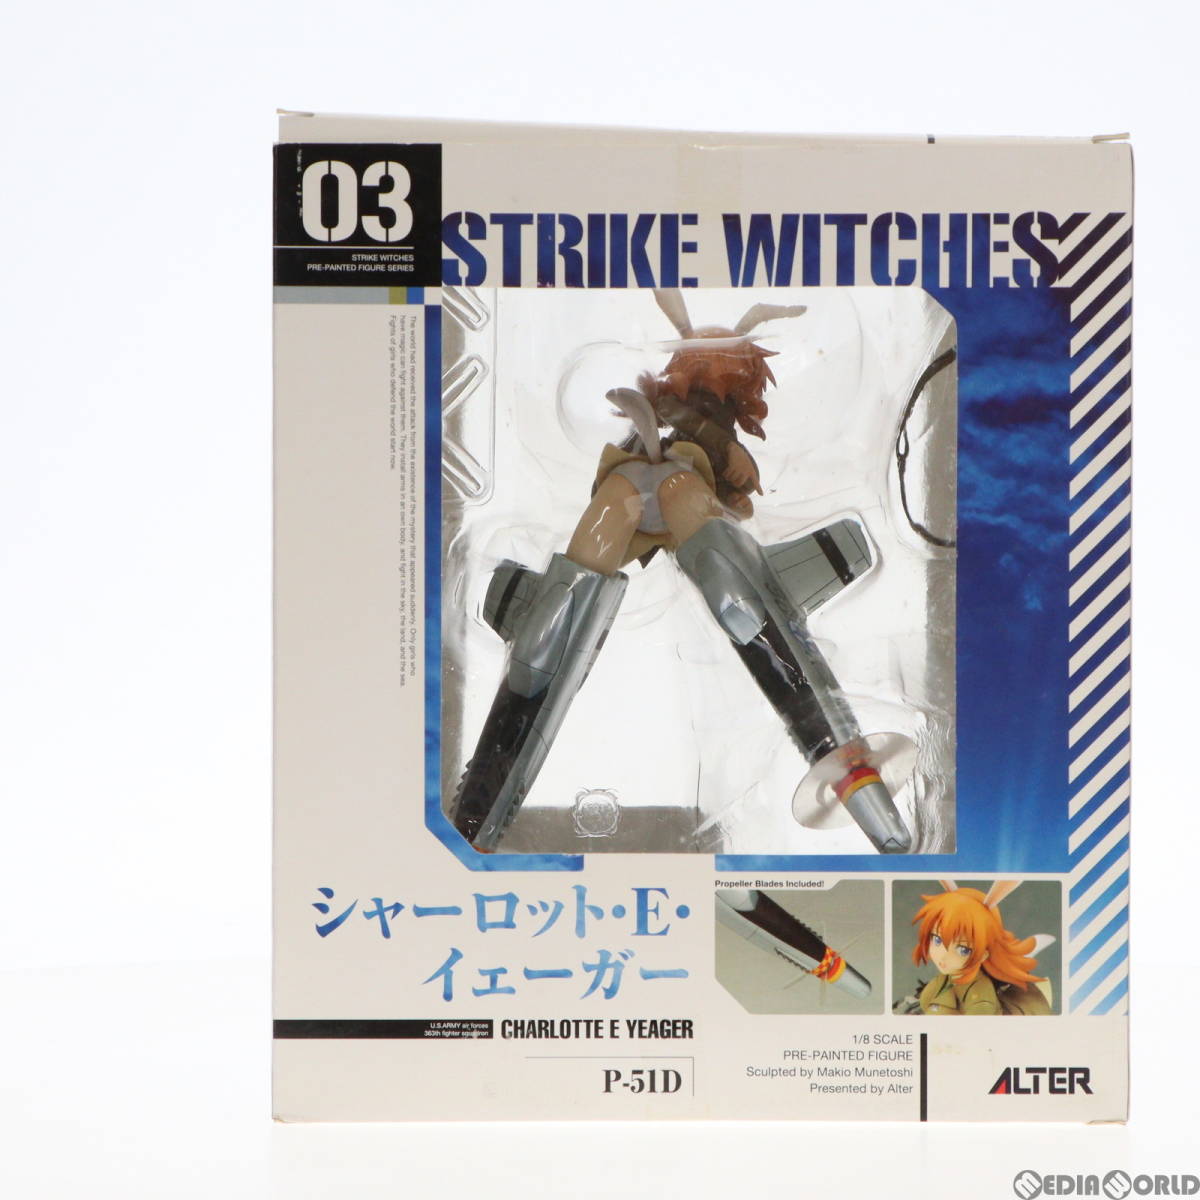 [ б/у ][FIG] Charlotte *E*i.-ga- Strike Witches 1/8 конечный продукт фигурка aruta-(61129245)